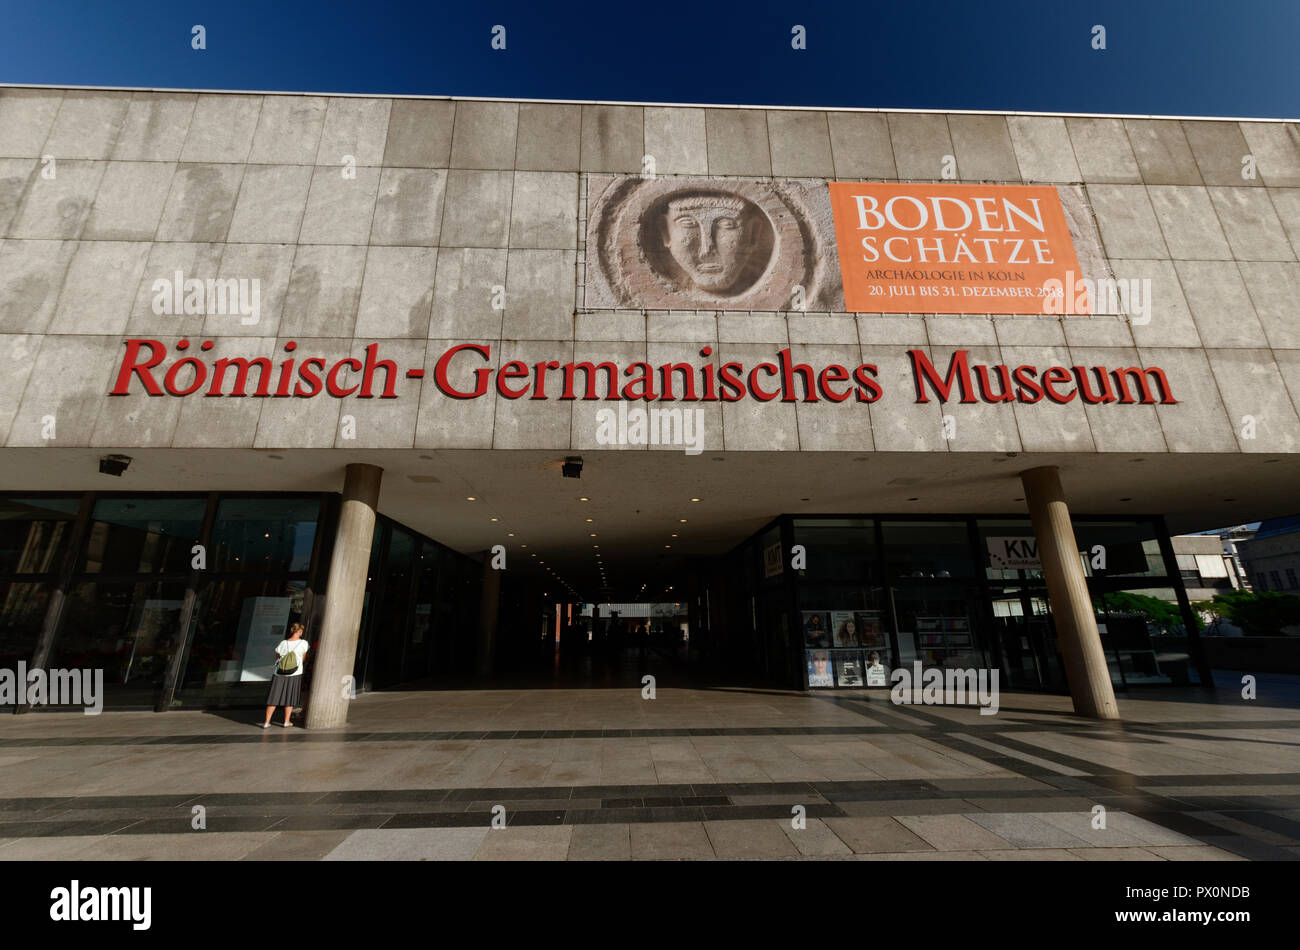 ROMANO - Germanische Museum in Köln Stockfoto